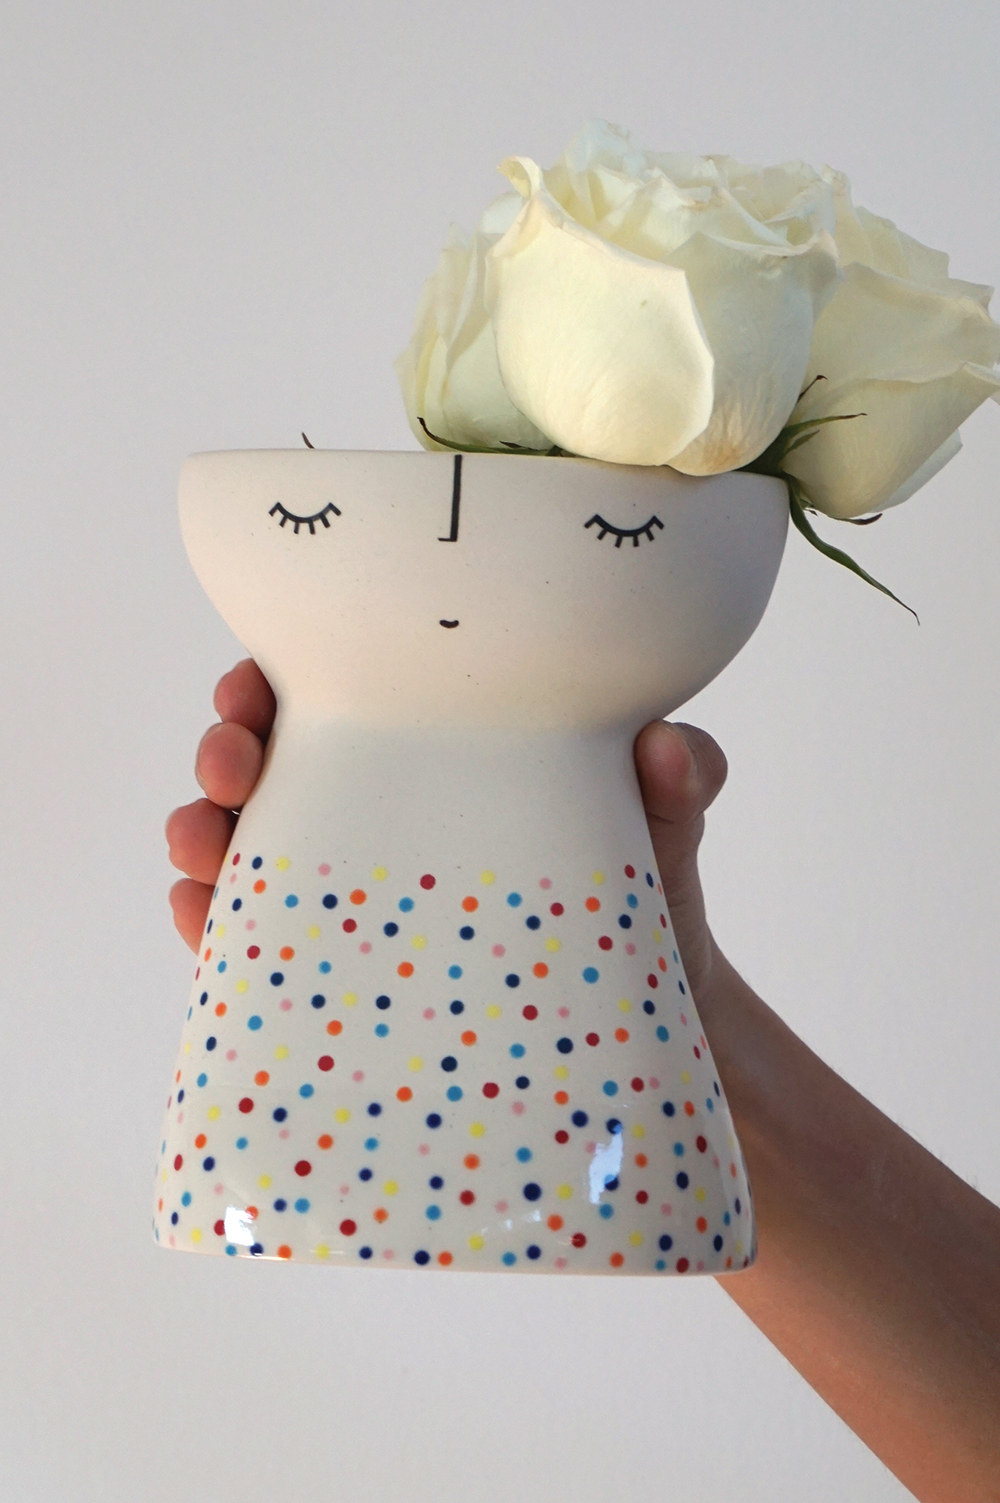 Curvy Vase $170